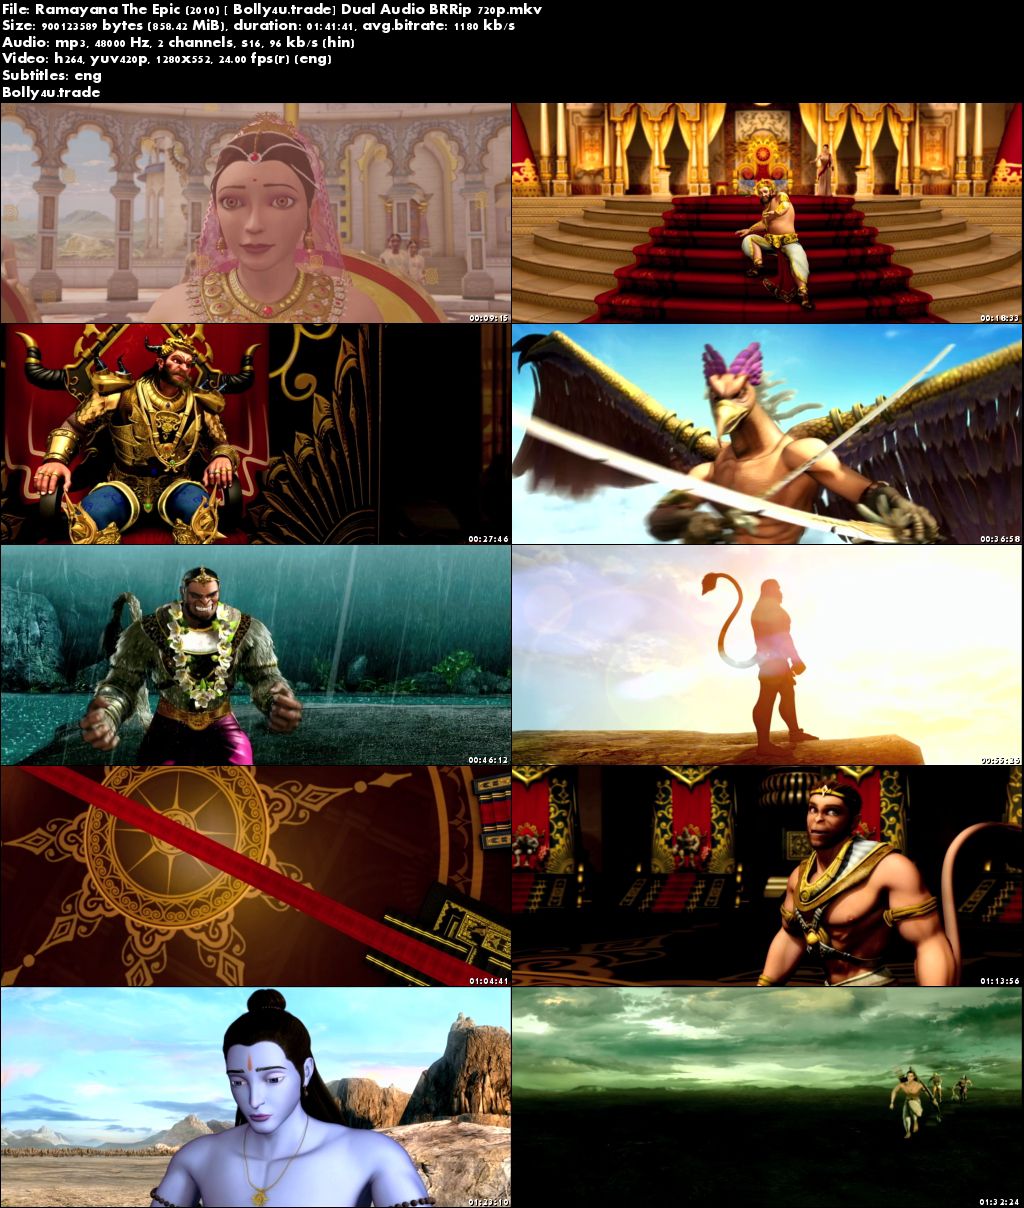 Ramayana The Epic 2010 BluRay 850MB Hindi 720p Download